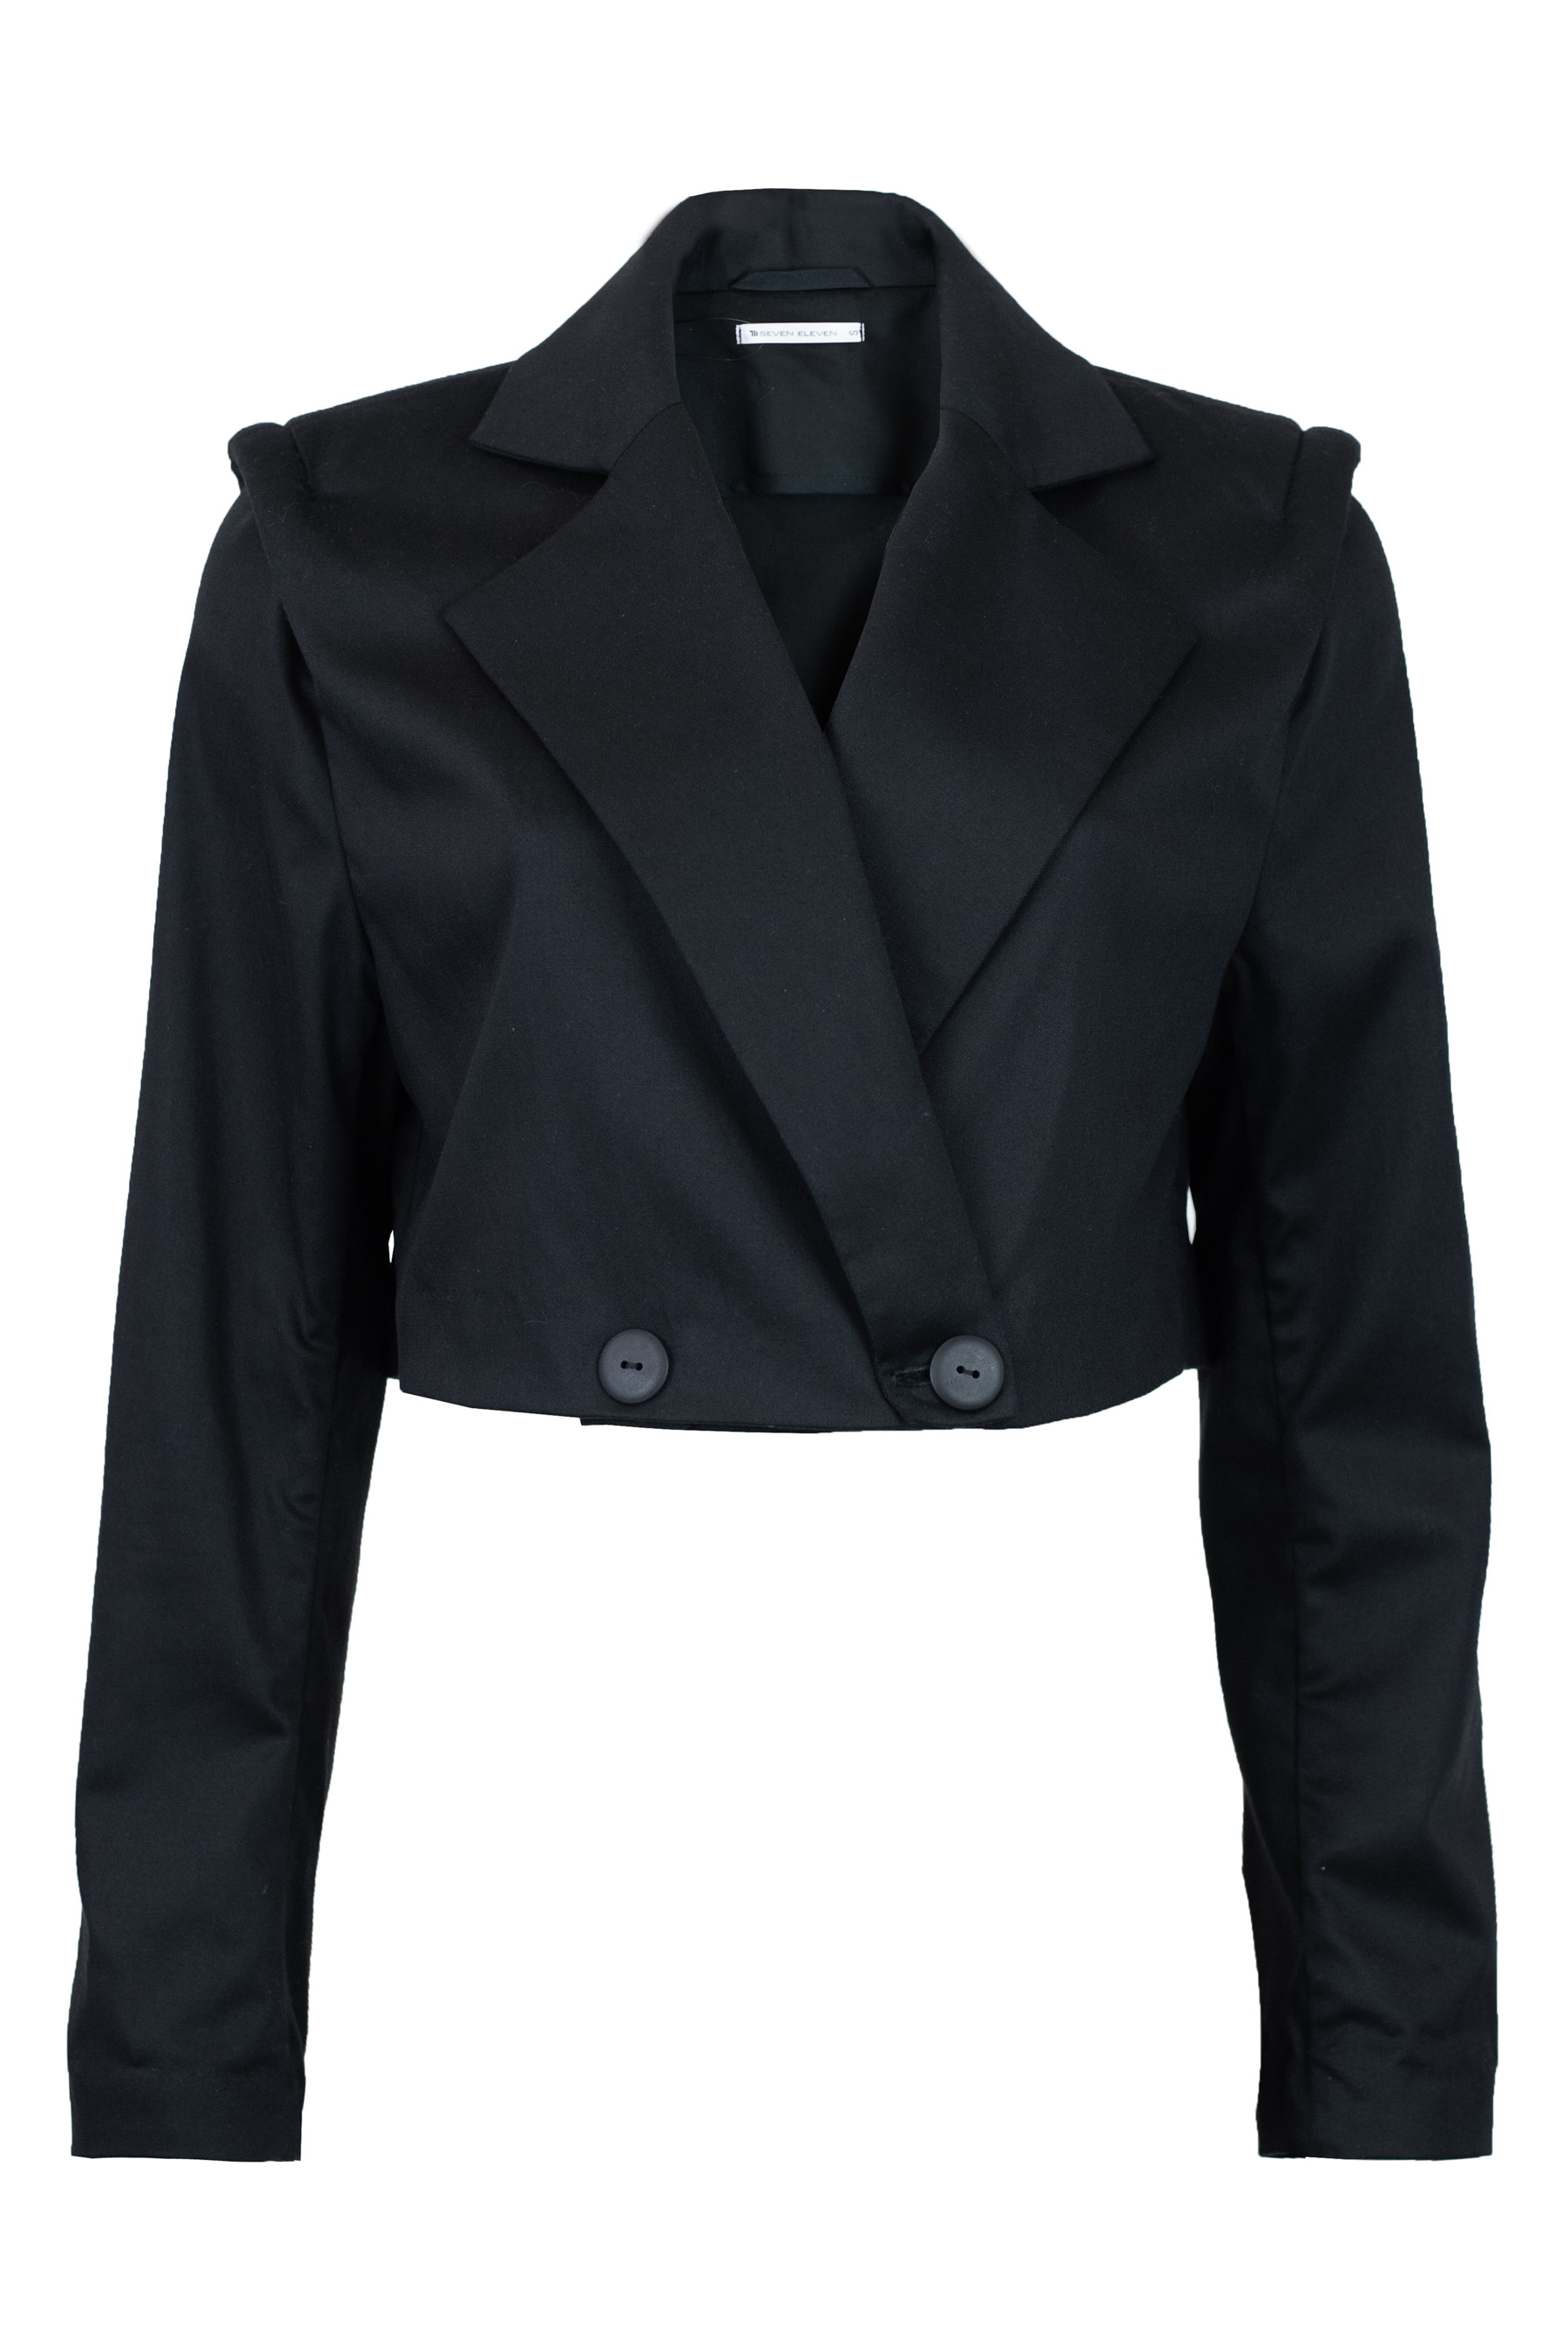 Cropped blazer black